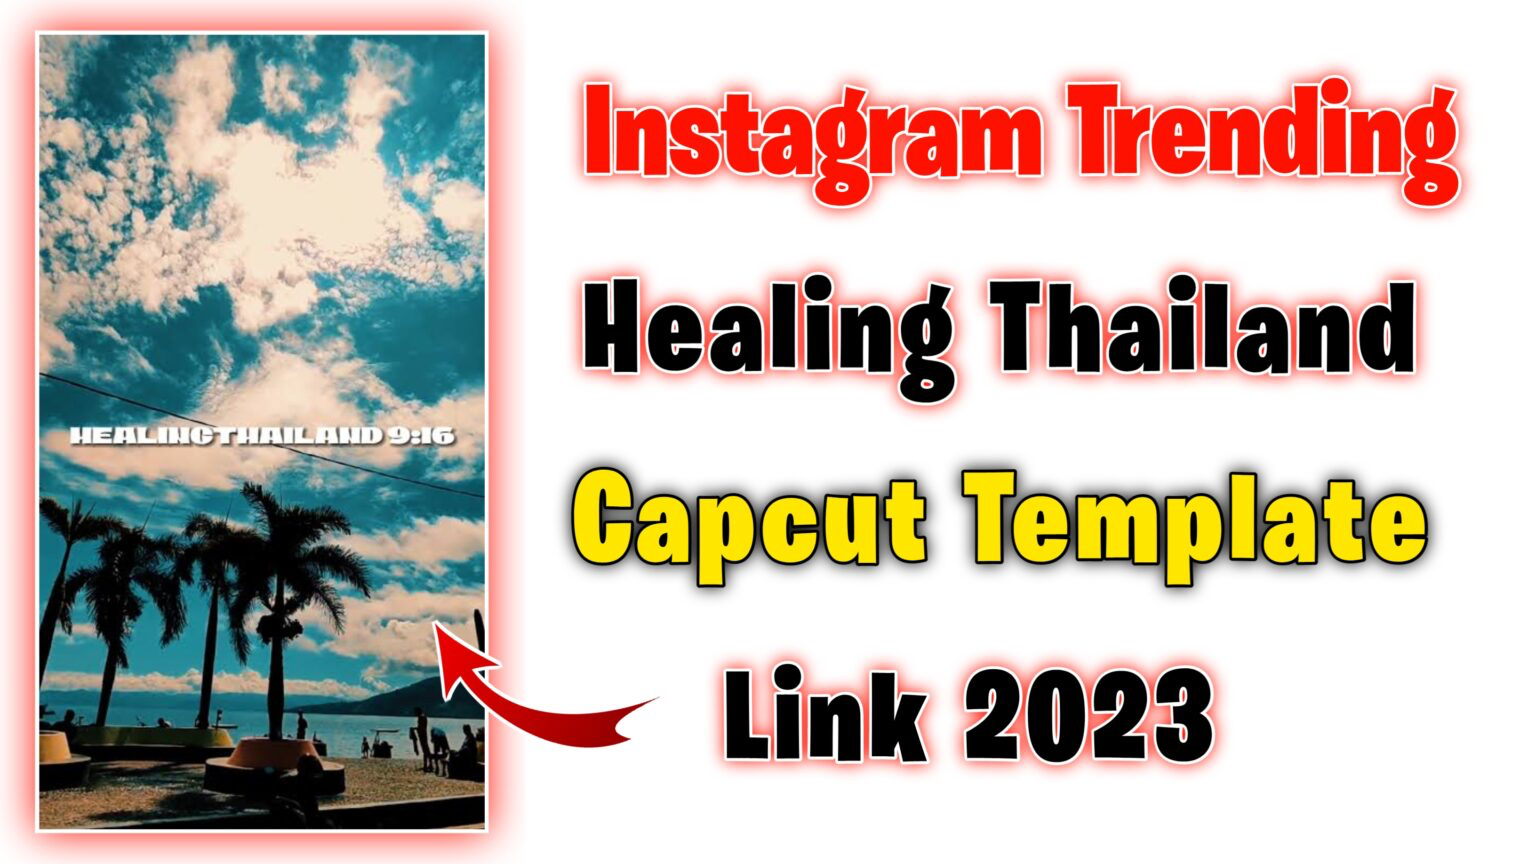 Healing Thailand CapCut Template Link 2023